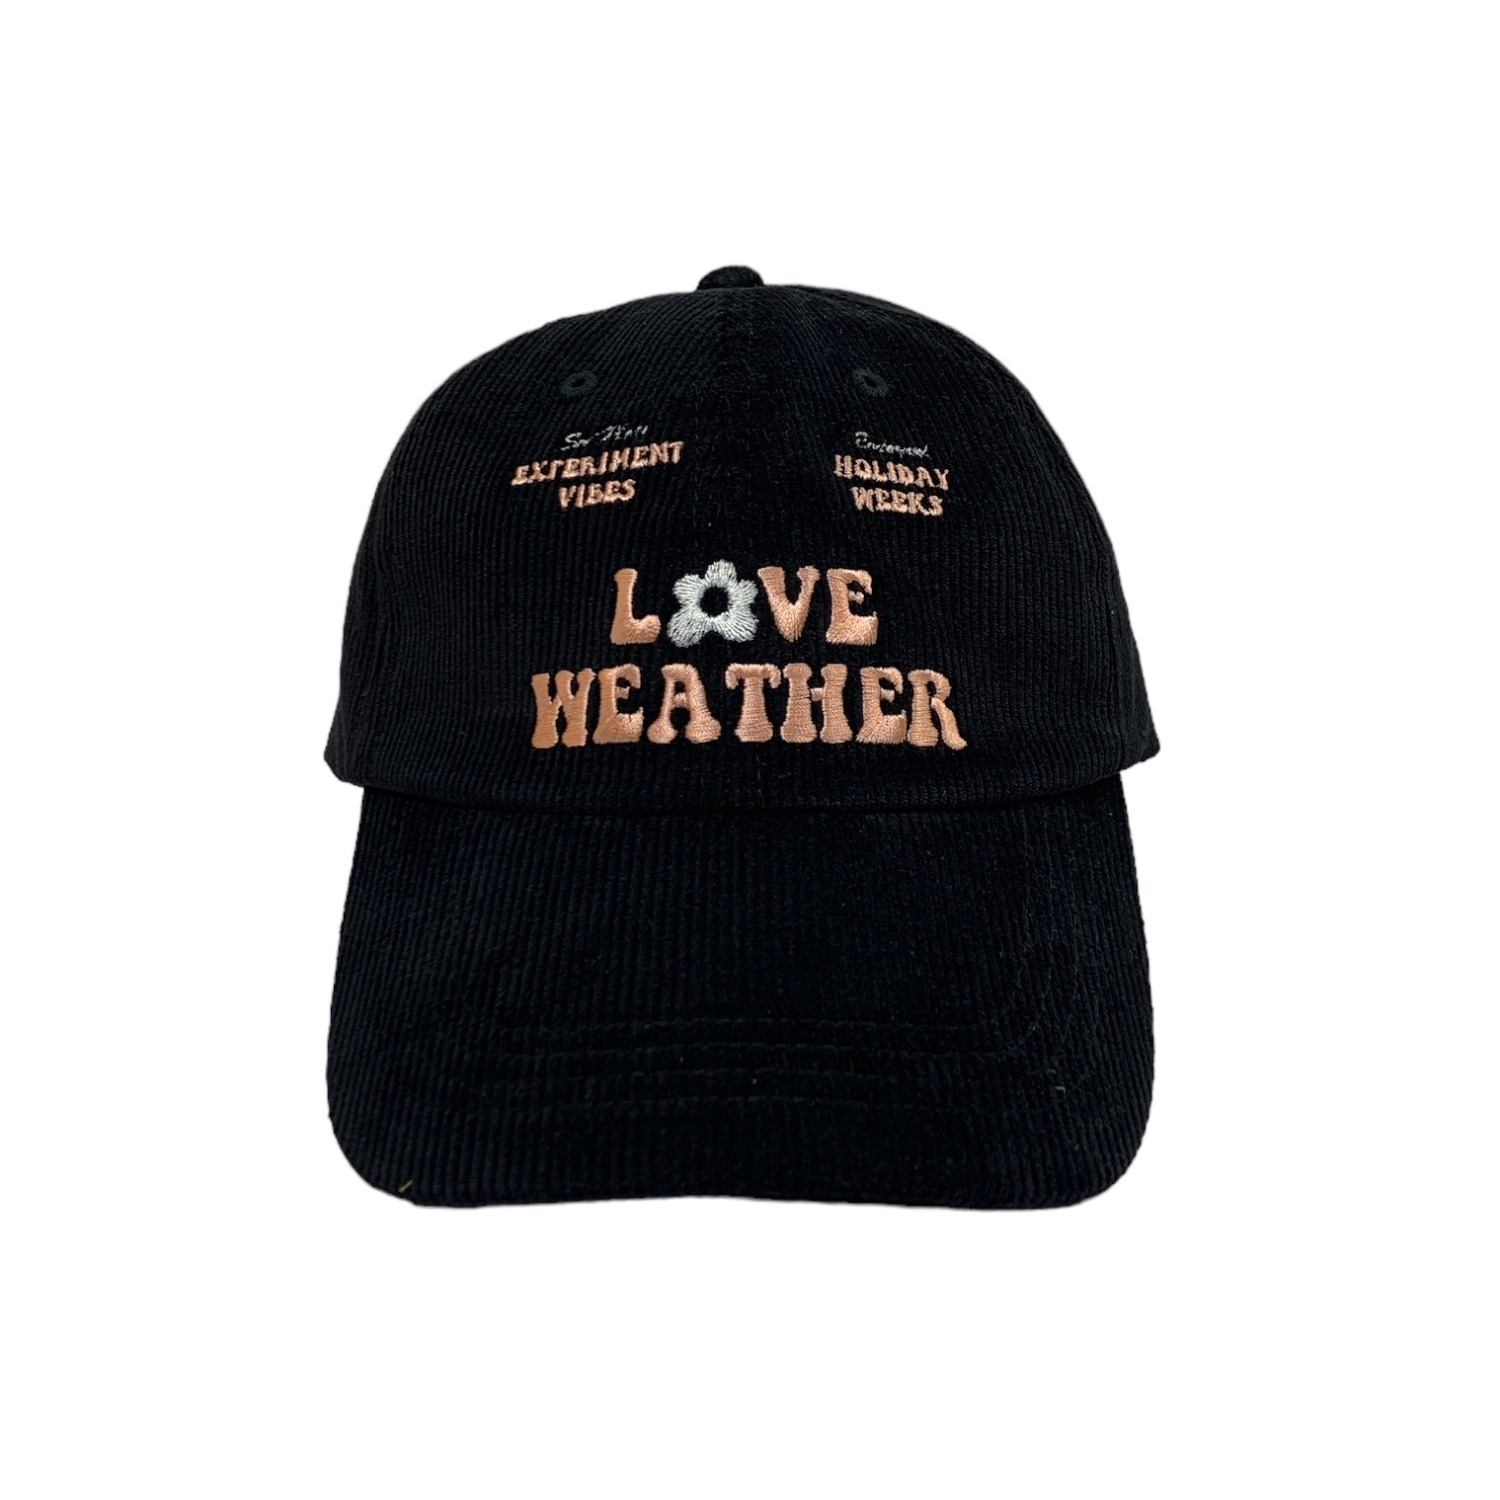 LOVE WEATHER CAP IN BLACK